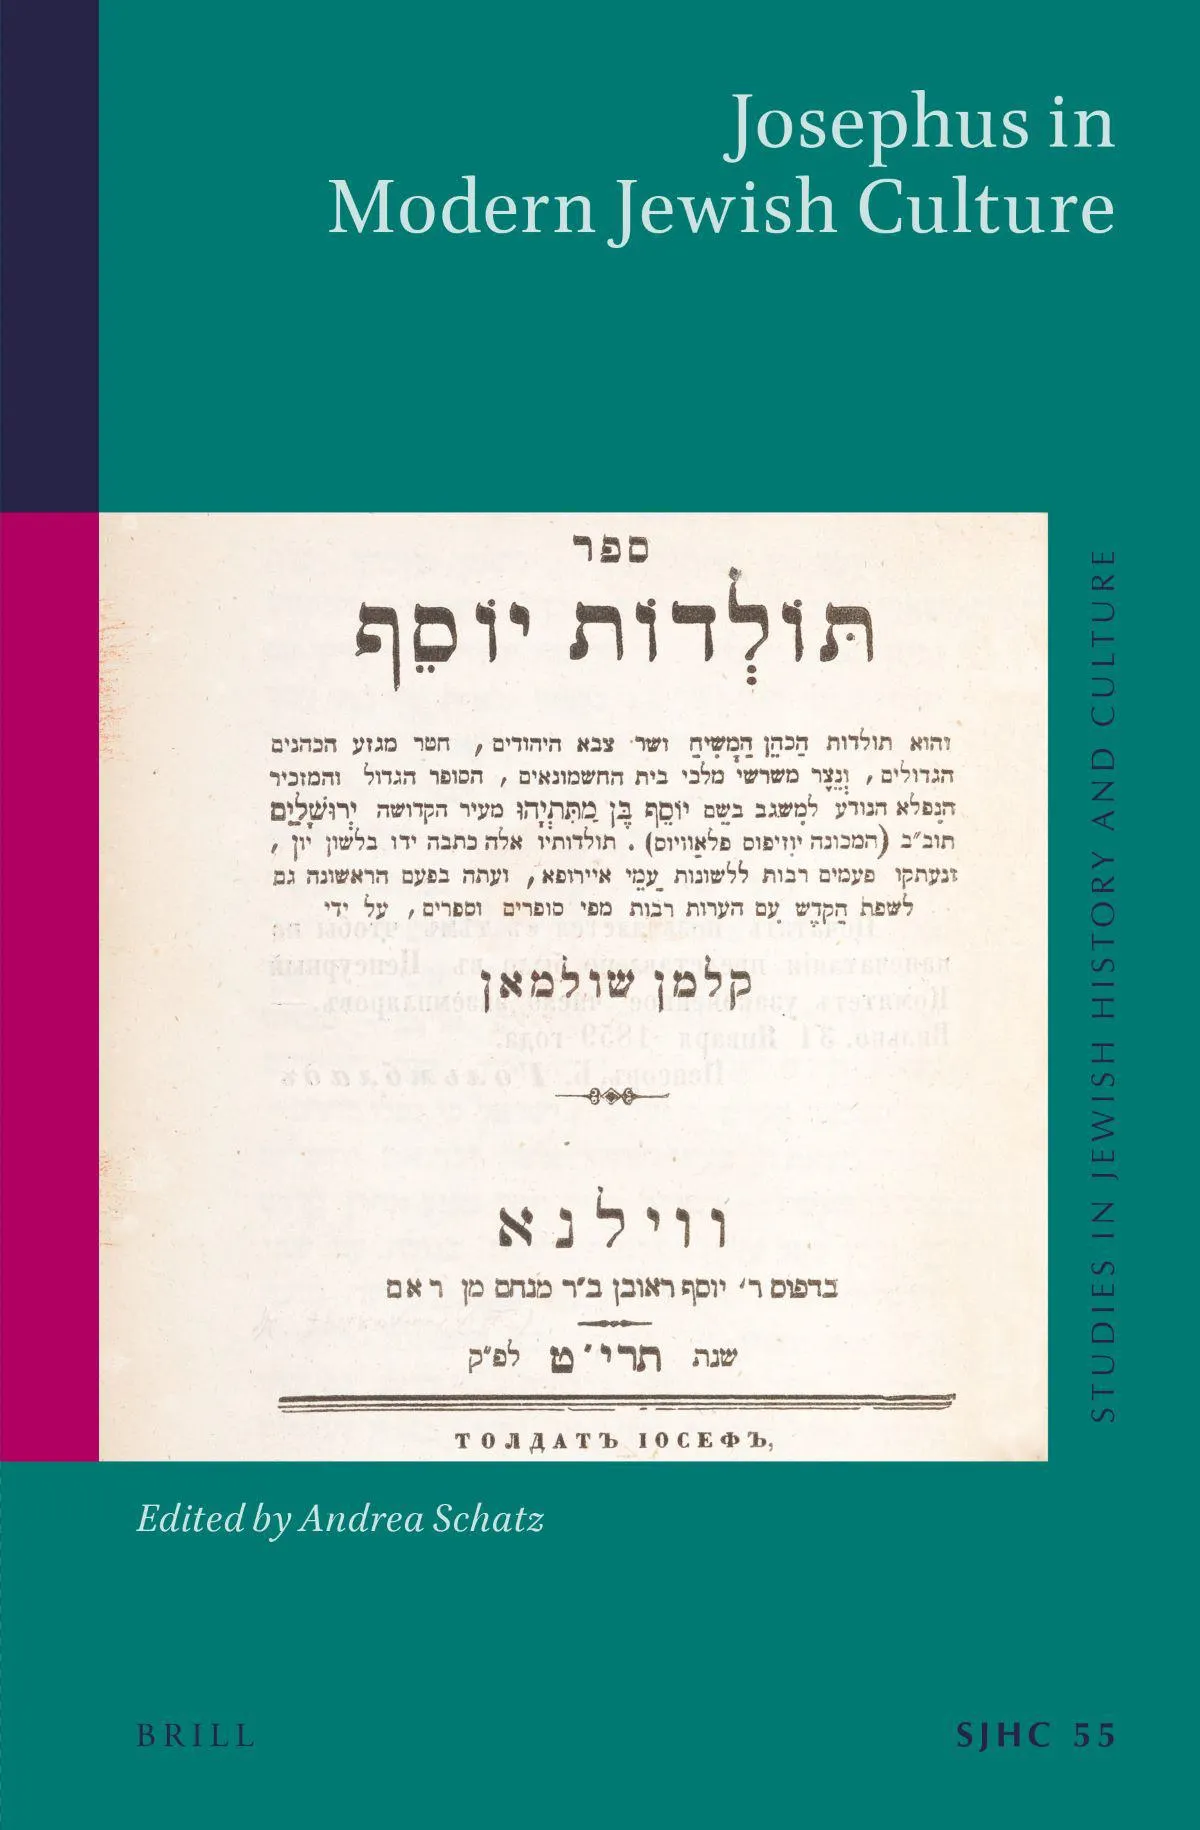 Josephus in Modern Jewish Culture: book cover